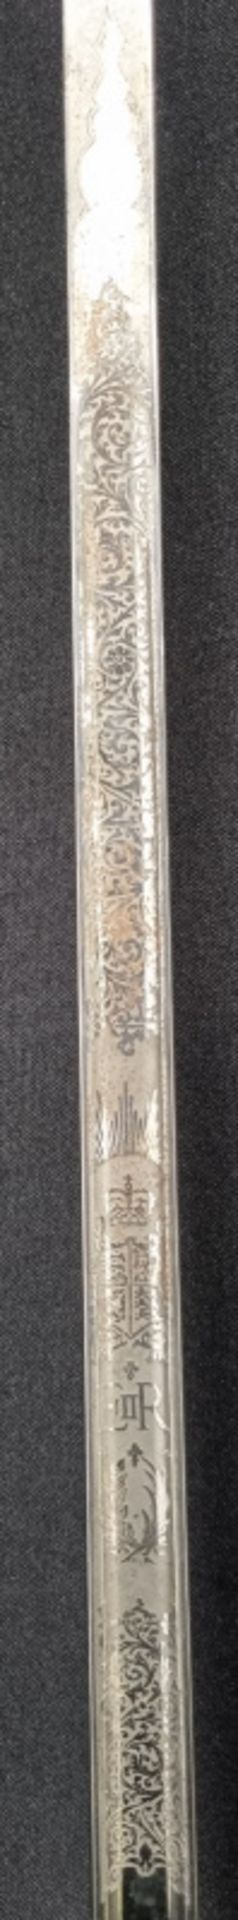 Wilkinson Sword Ltd. Ceremonial Sword - serial number 84032 - Image 8 of 11